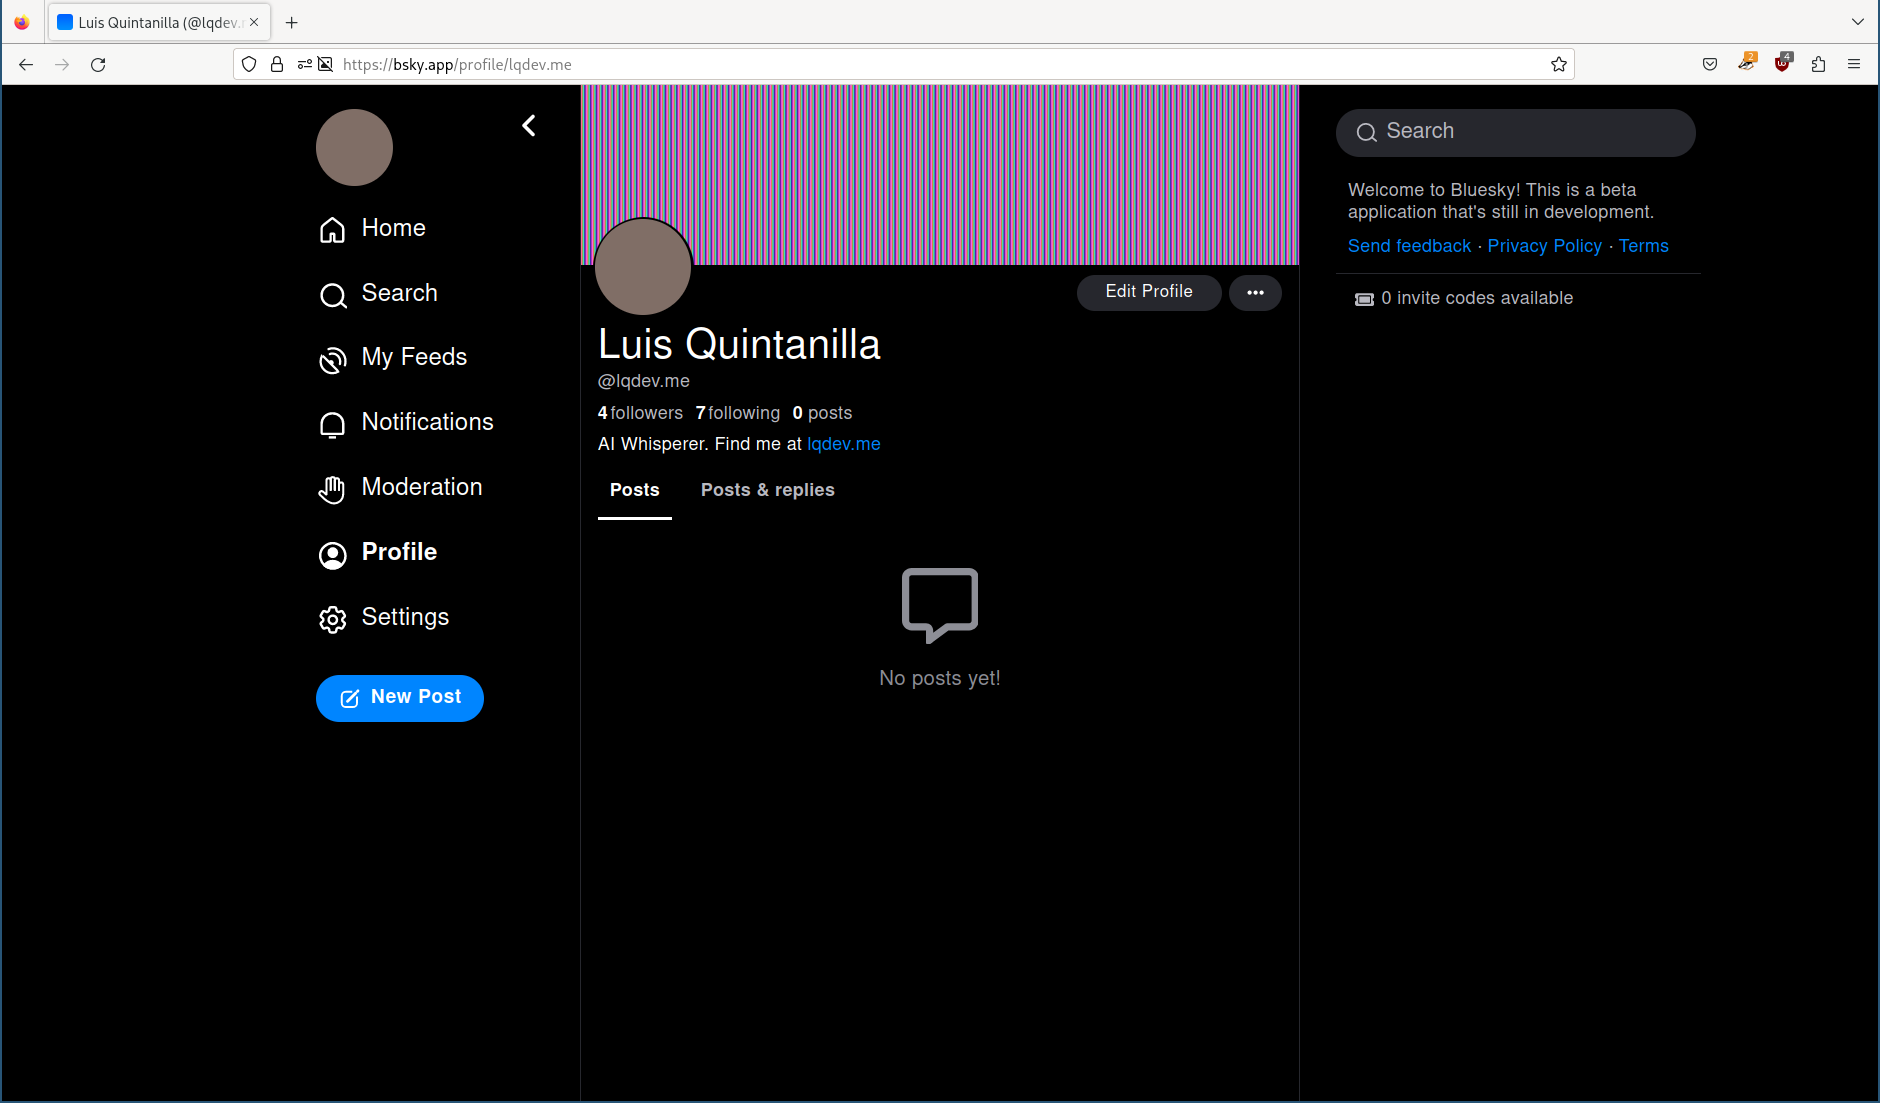 Bluesky web app showing lqdev.me profile